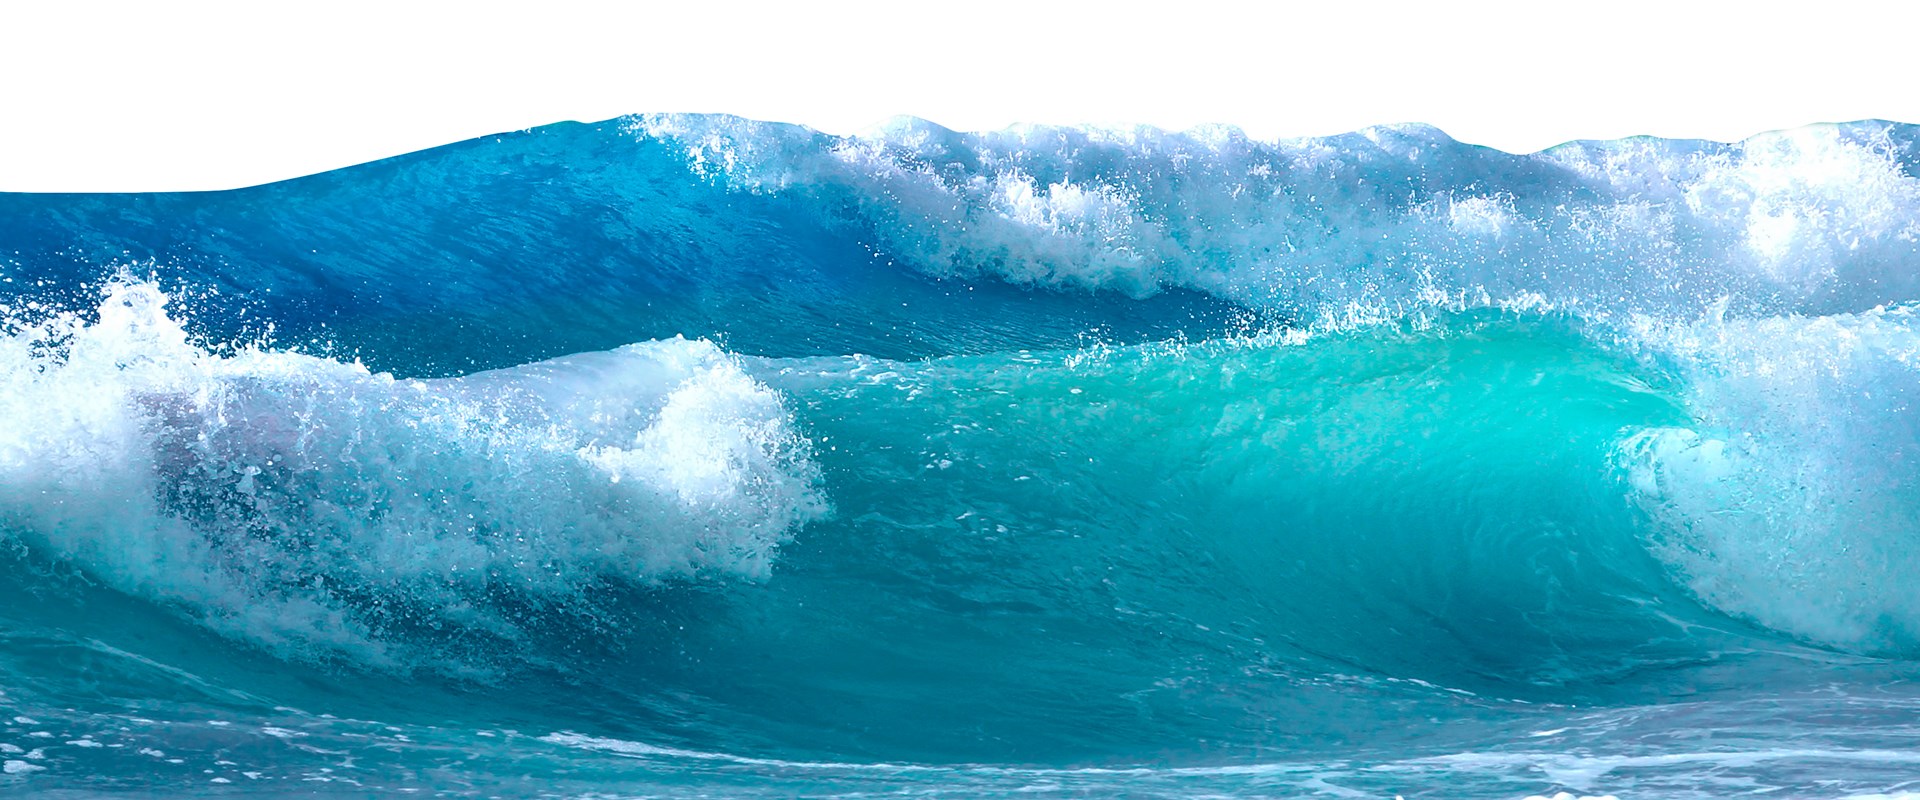 Image of waves crashing in the ocean